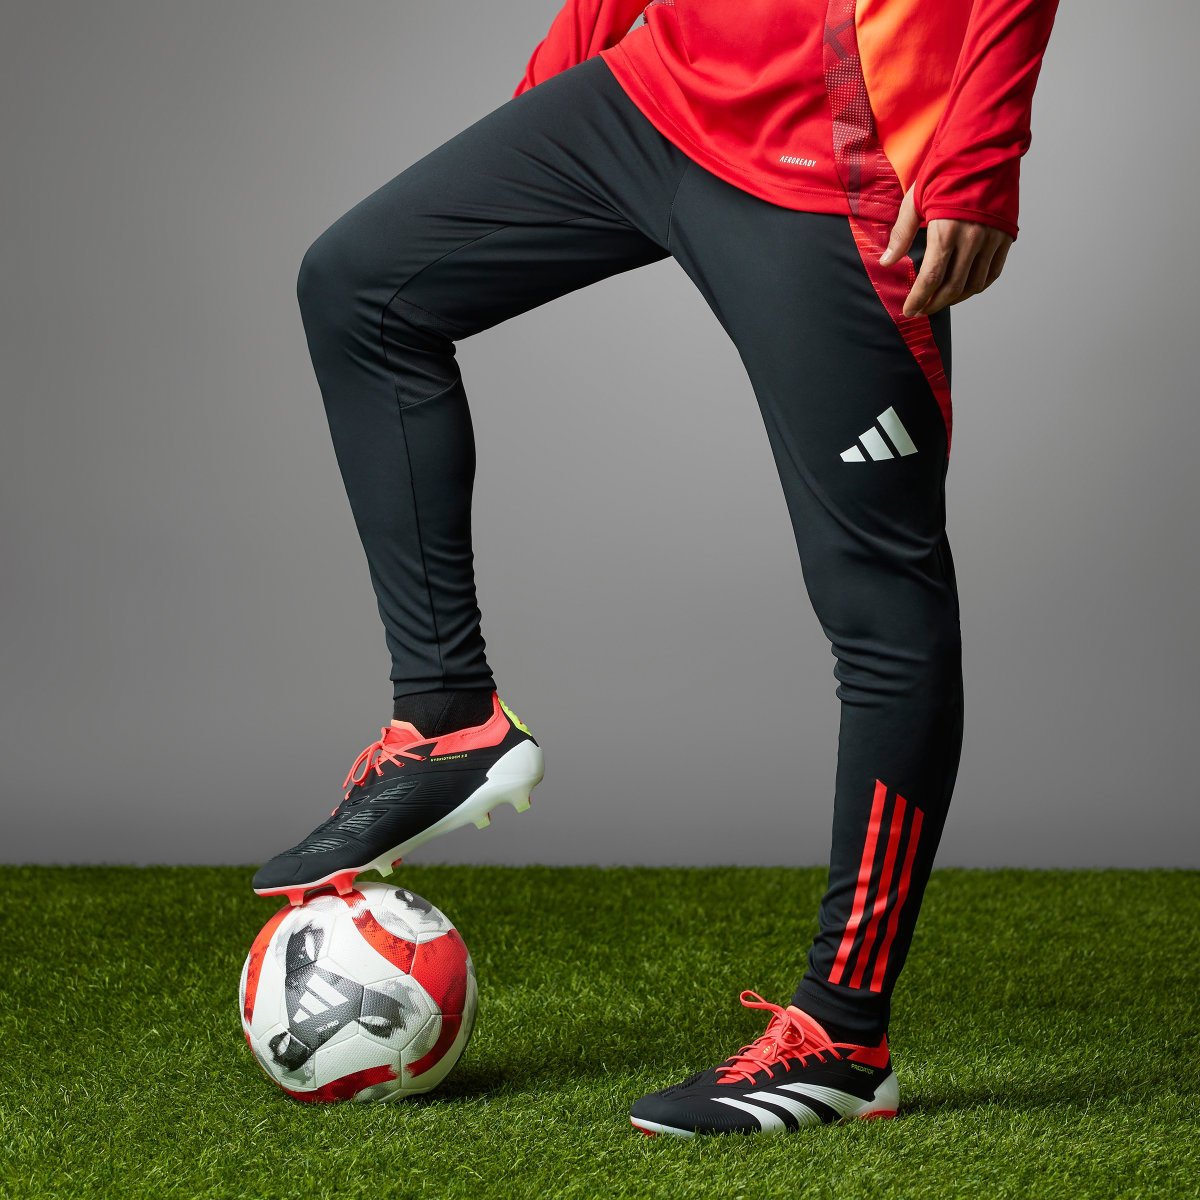 Adidas Predator Elite Firm Ground Football Boots. 7